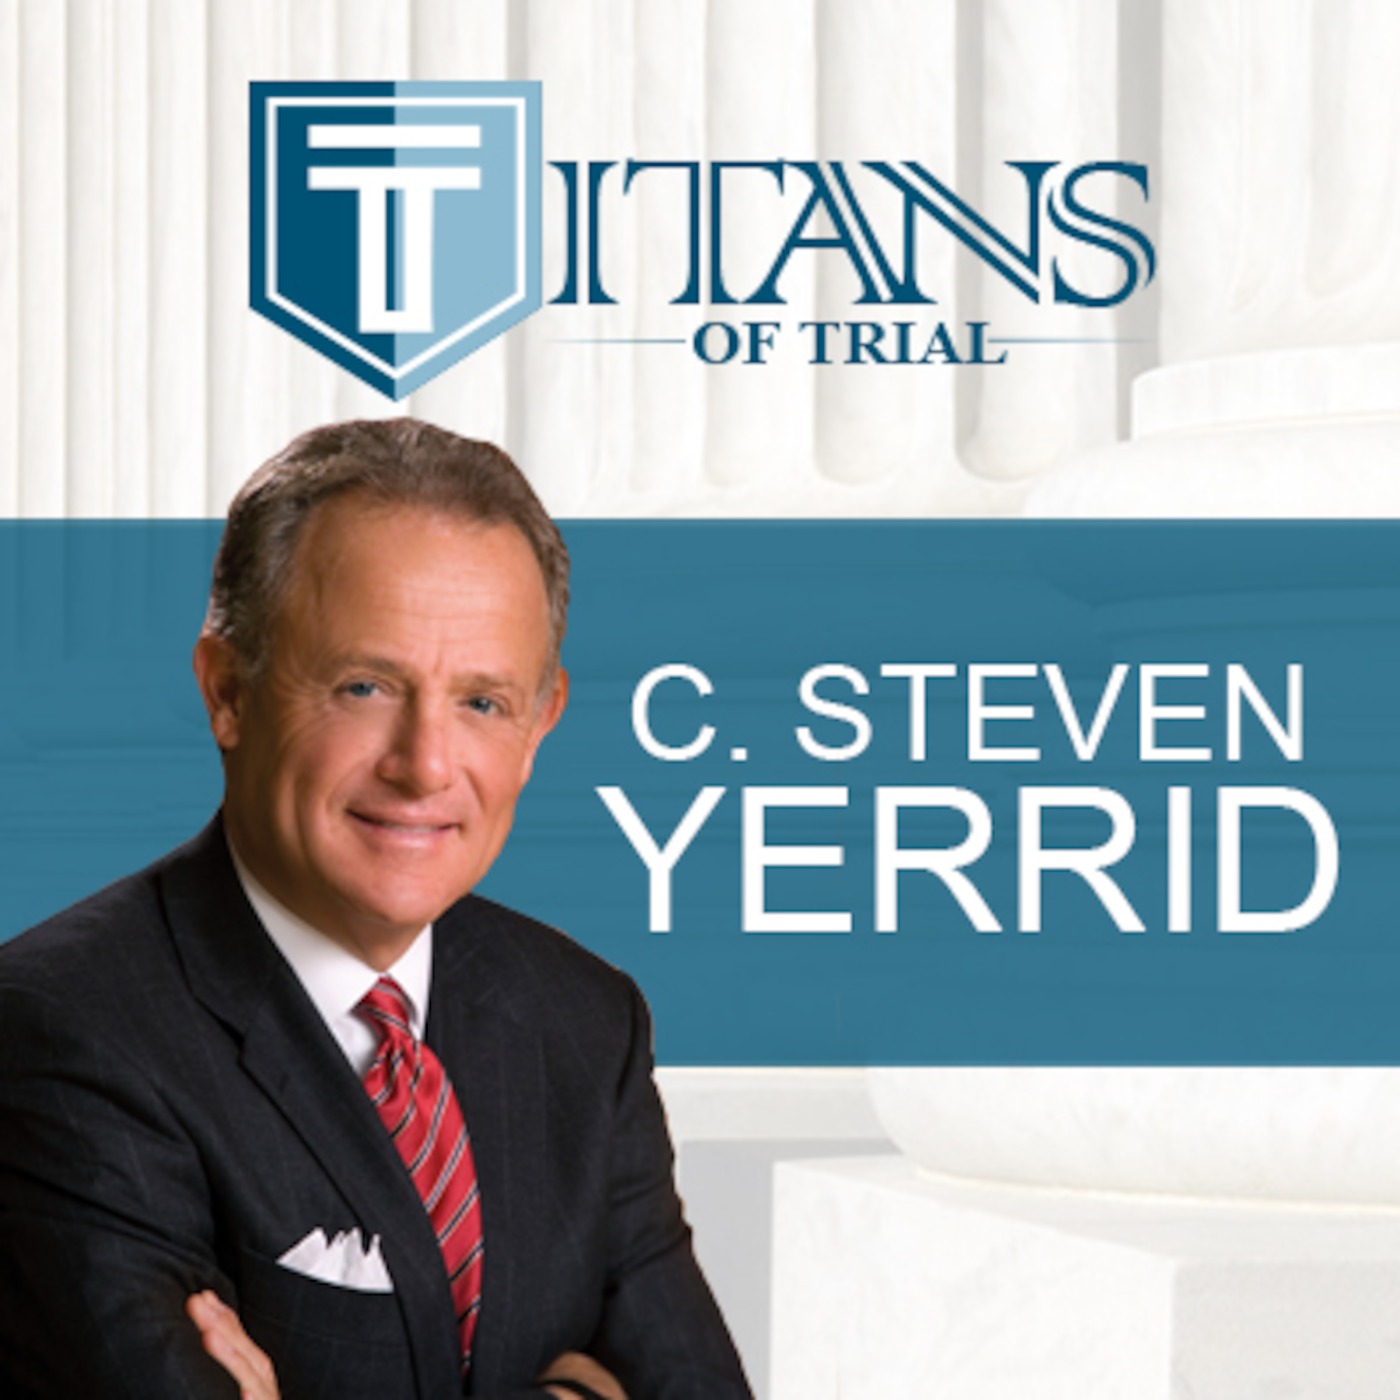 Titans of Trial - Steve Yerrid